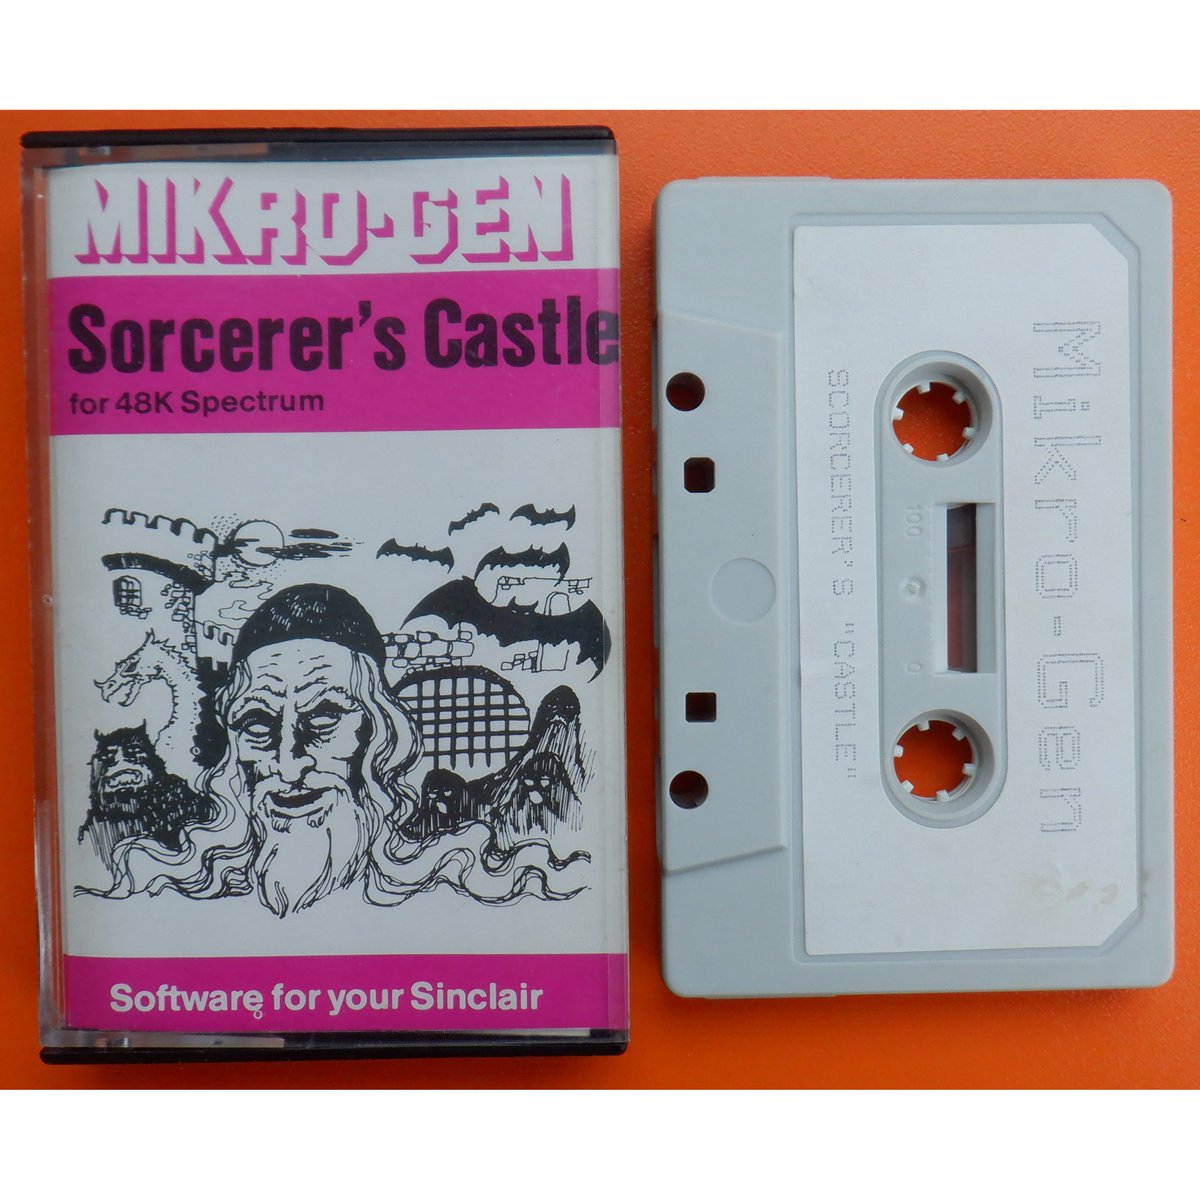 Sorcerer's Castle - a vintage computer game for the ZX Spectrum on cassette ©1983 Mikro-Gen. 🏰 🛒 ebay.co.uk/itm/1666230613… #Vintage #FollowVintage #SorcerersCastle #VintageComputerGame #1980s #ZXSpectrum #MikroGen #eBay